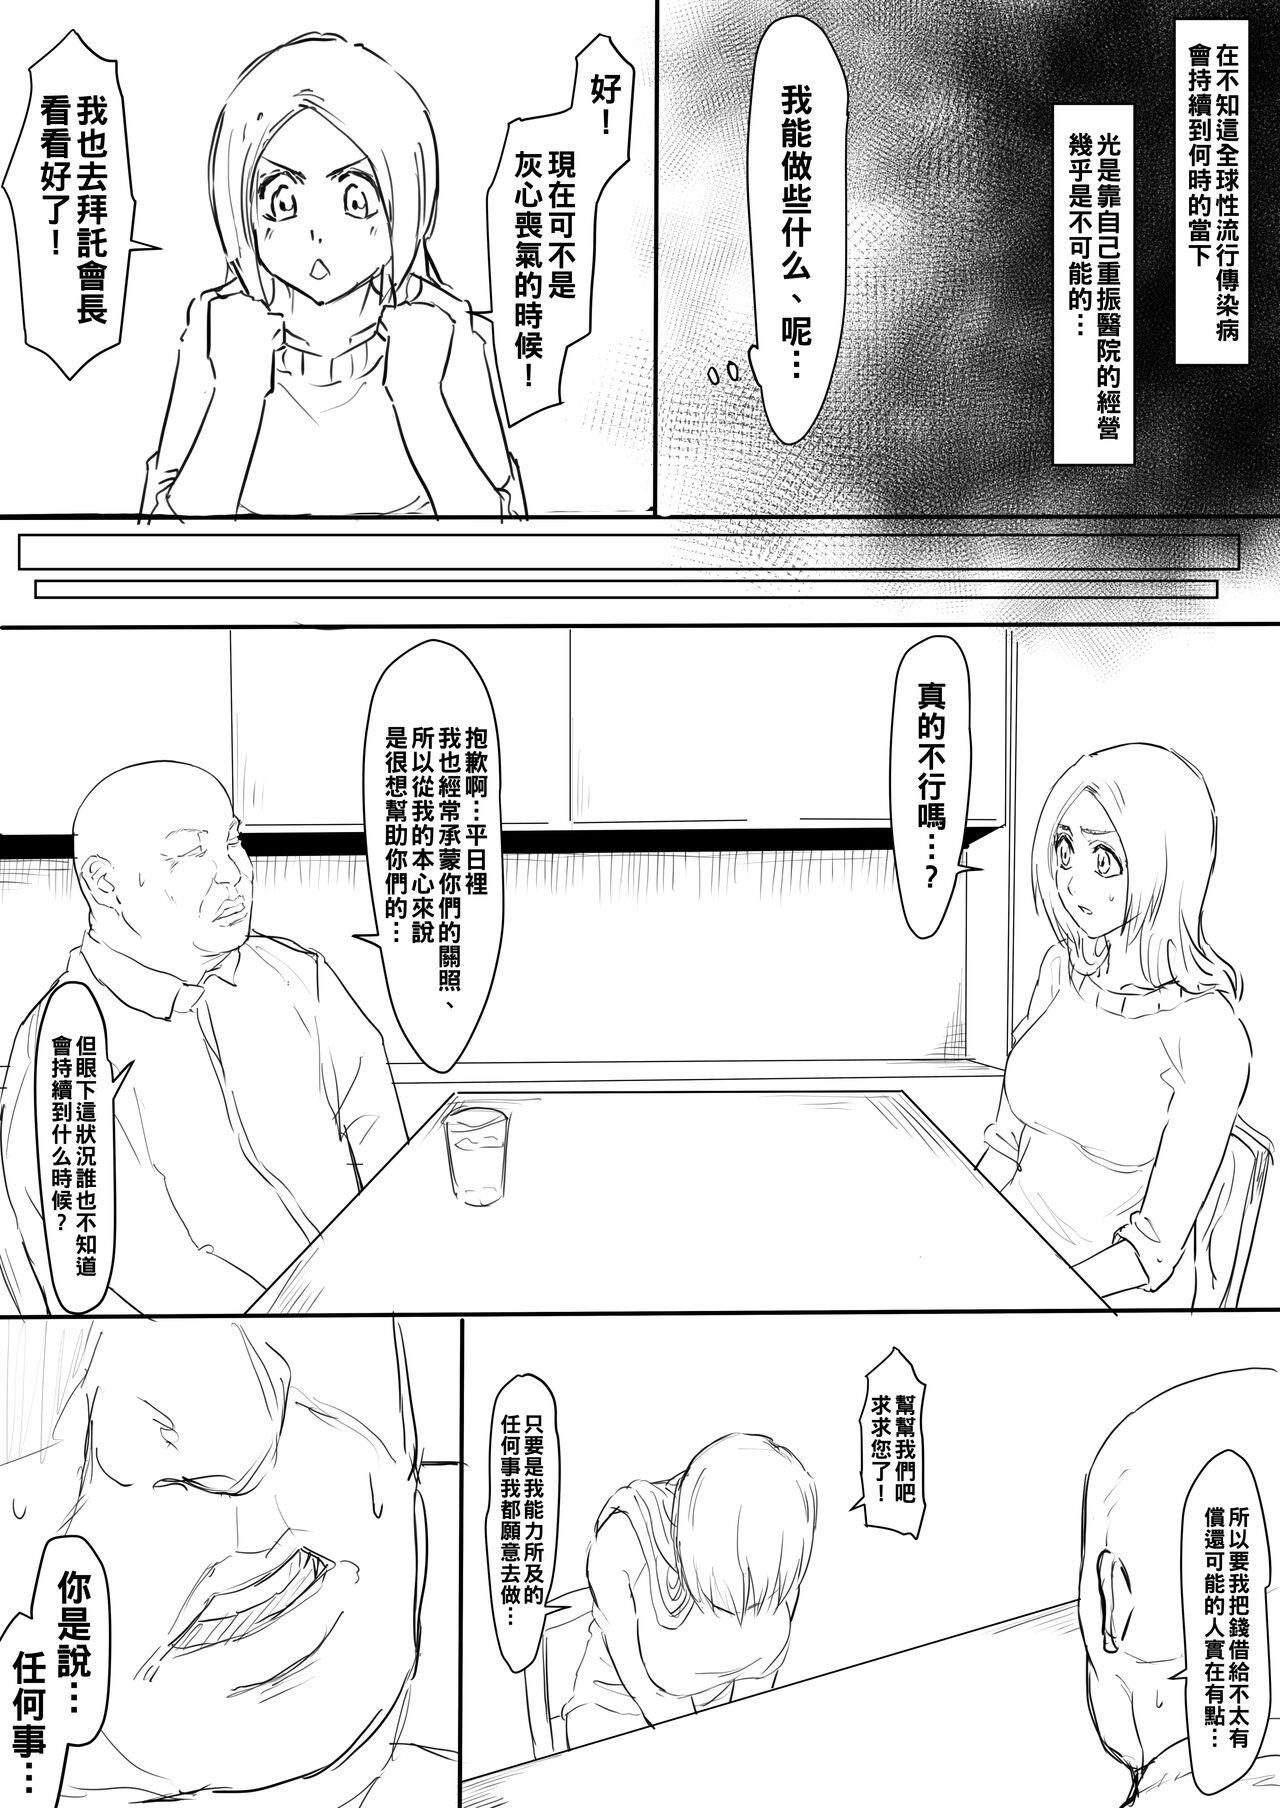 Pinoy Orihime Manga - Bleach Novia - Page 2